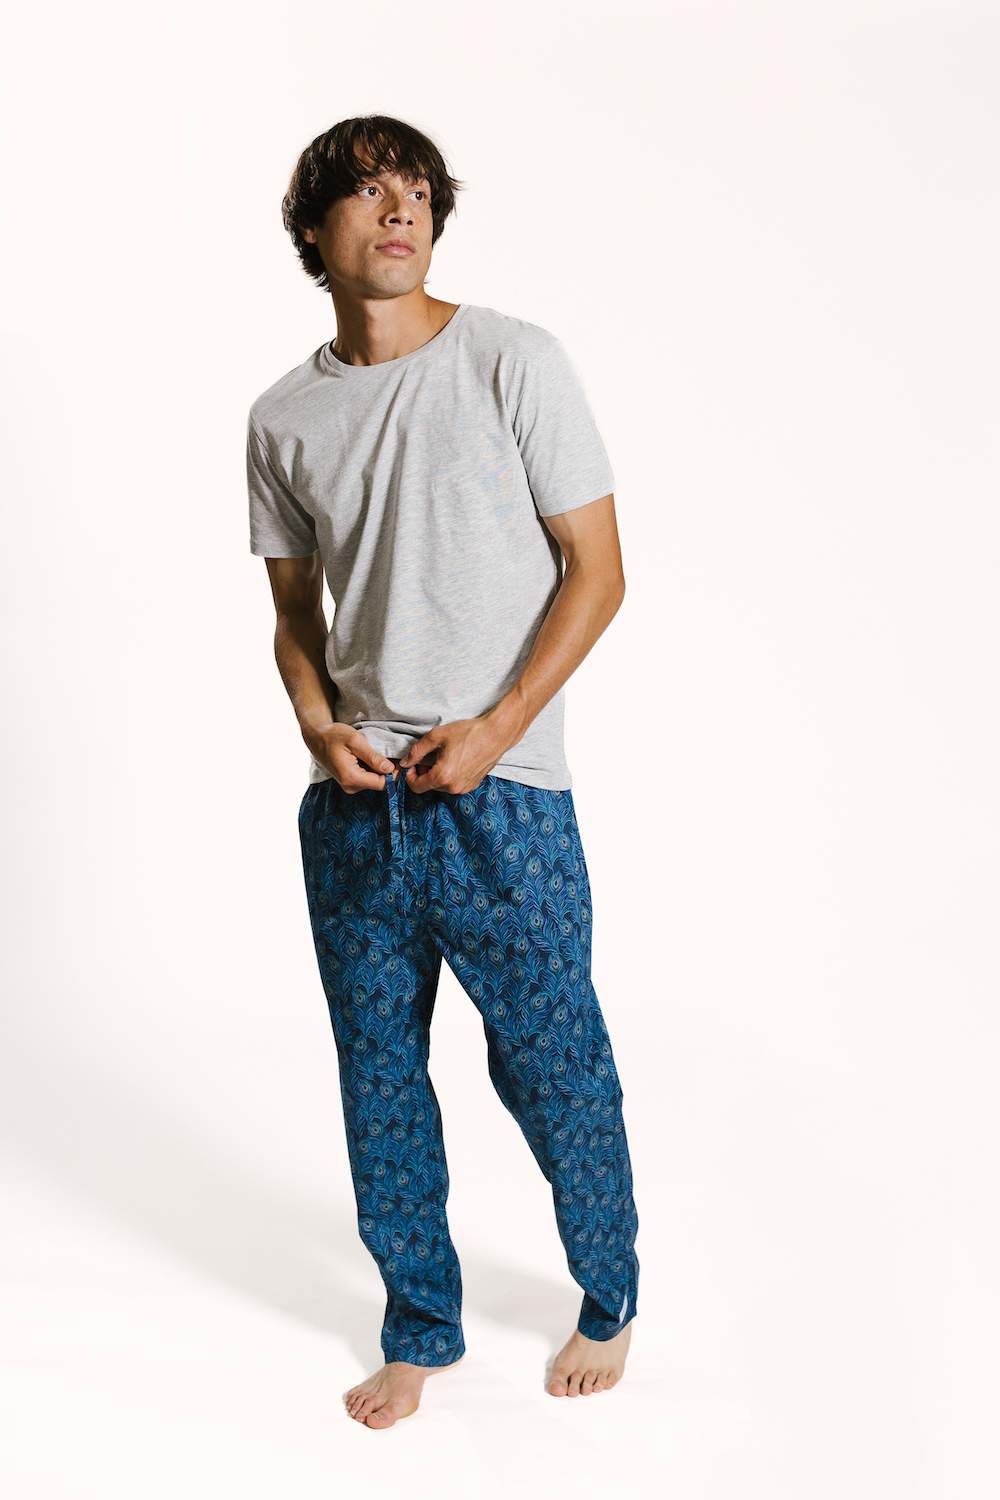 Buy Gap Tartan Pyjama Trousers from the Gap online shop